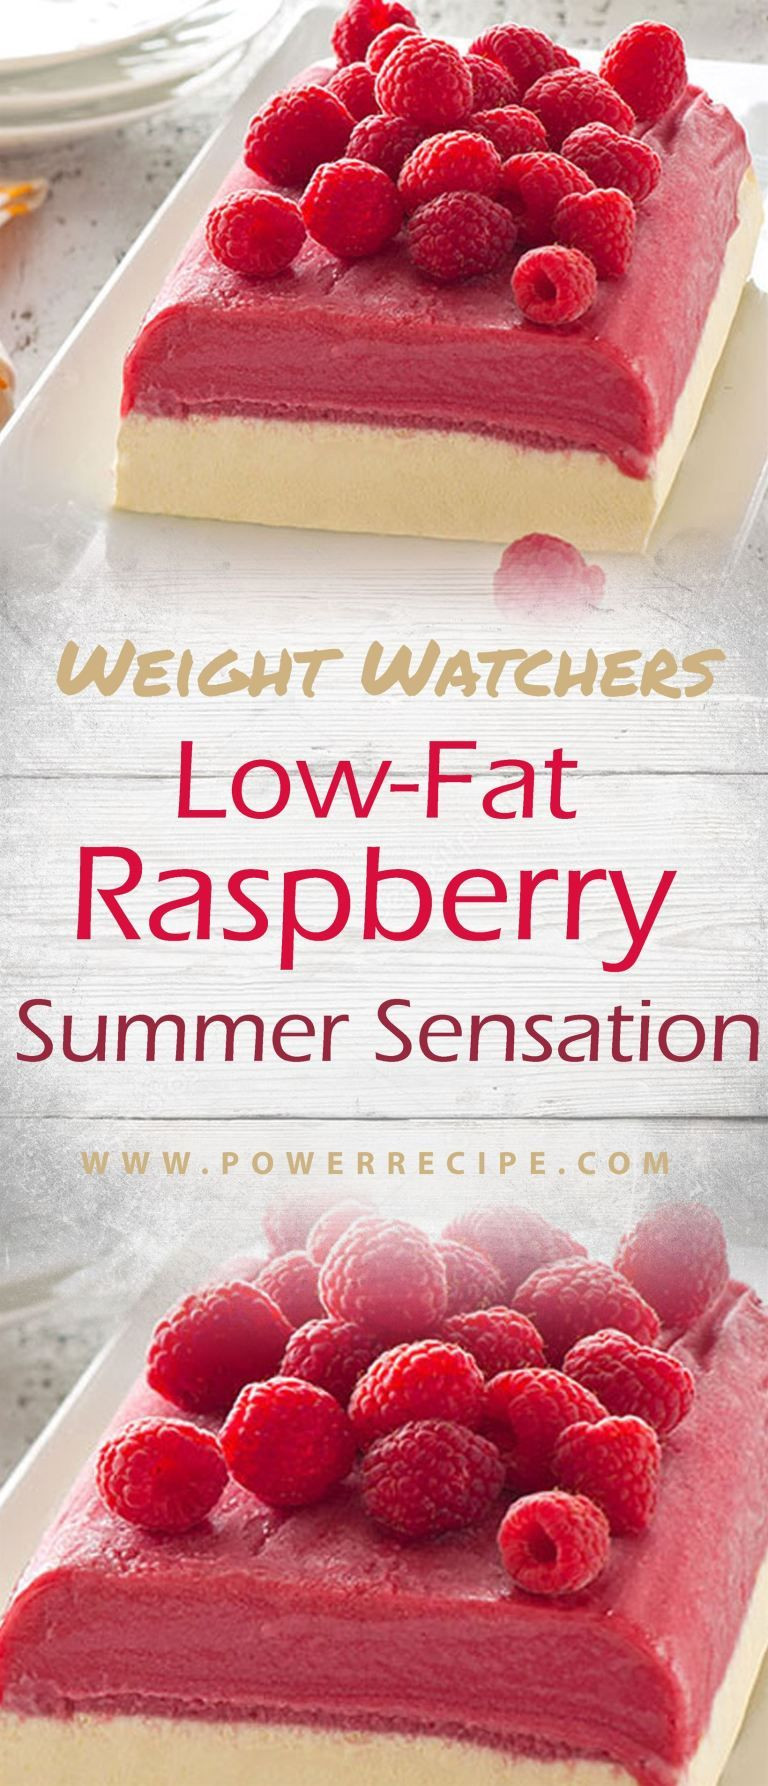 Low Calorie Summer Desserts
 Low Fat Raspberry Summer Sensation All about Your Power